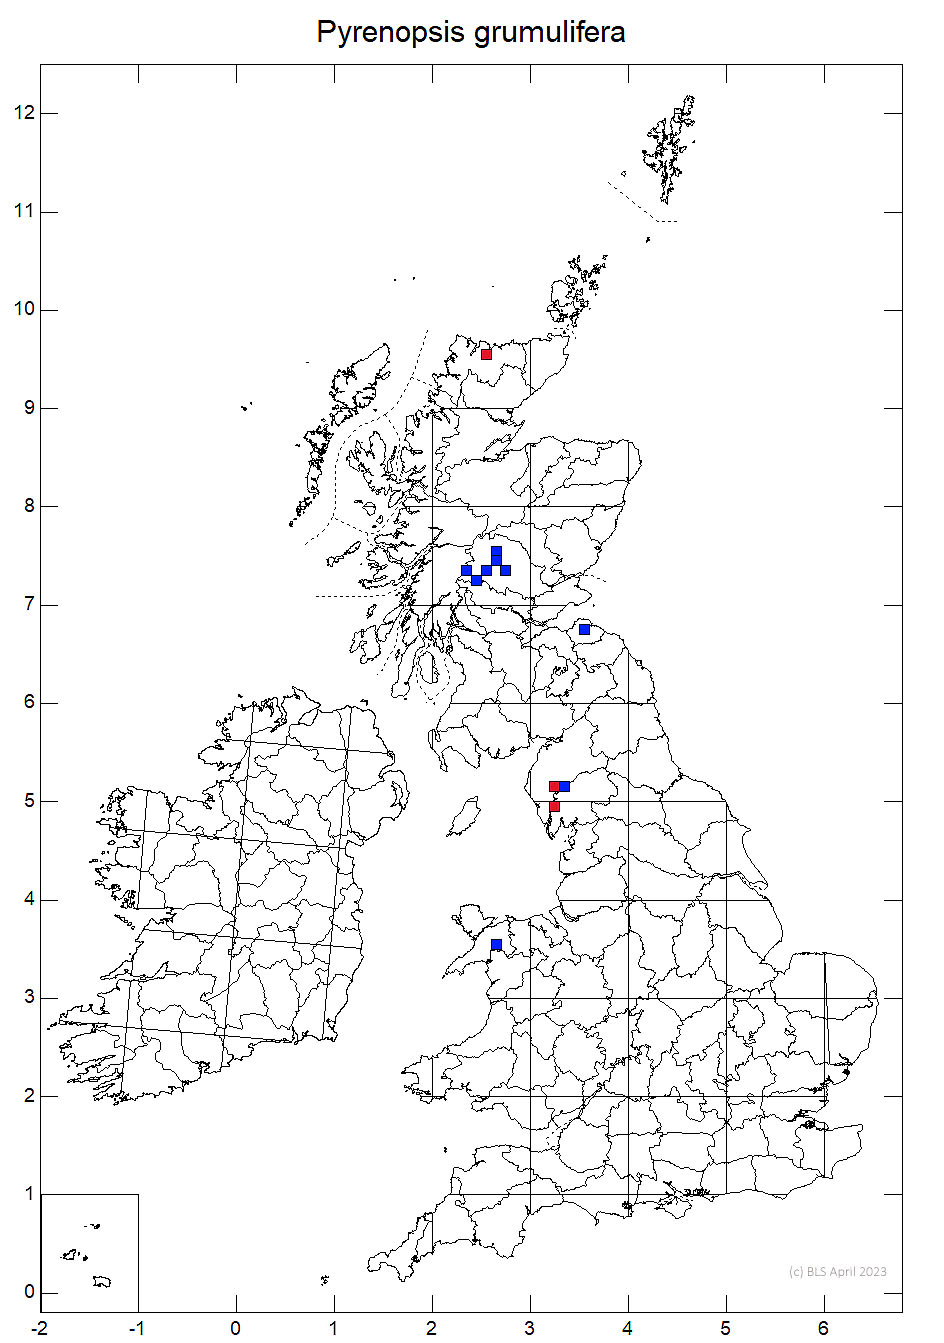 Pyrenopsis grumulifera 10km sq distribution data